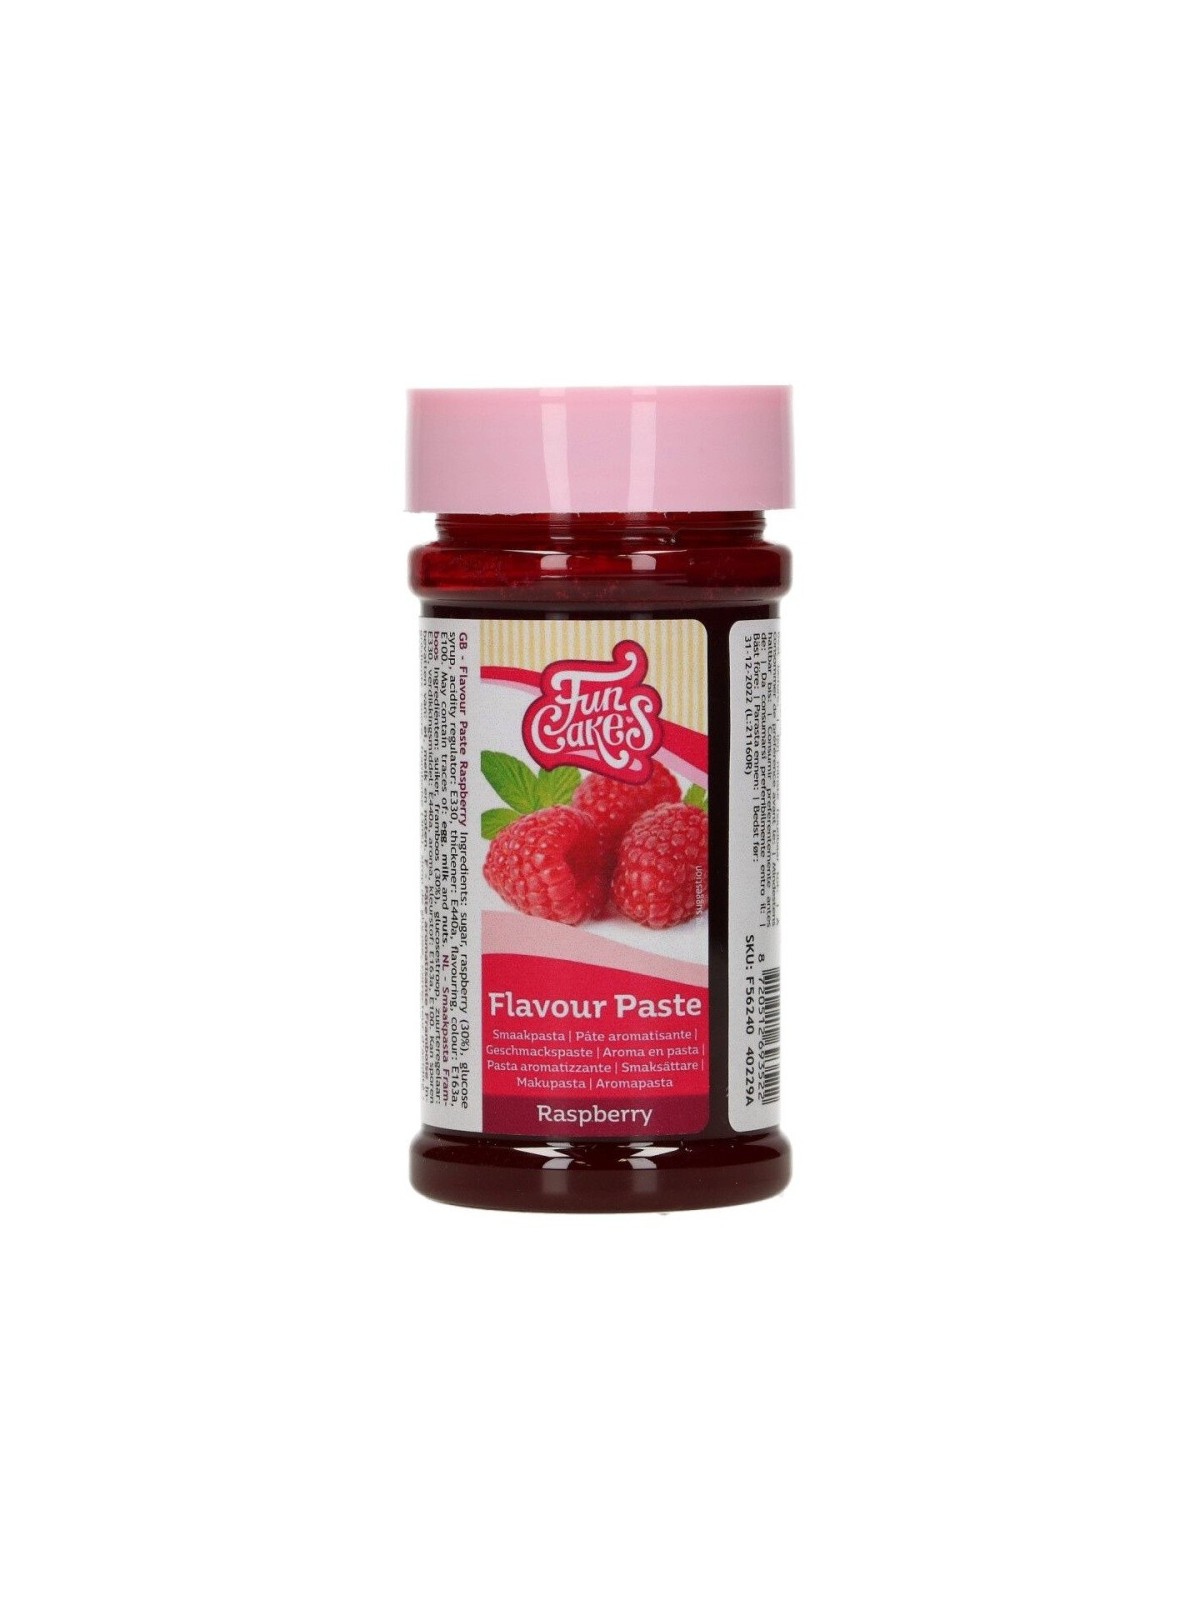 FunCakes Flavouring  - Raspberry - Himbeere - 120g